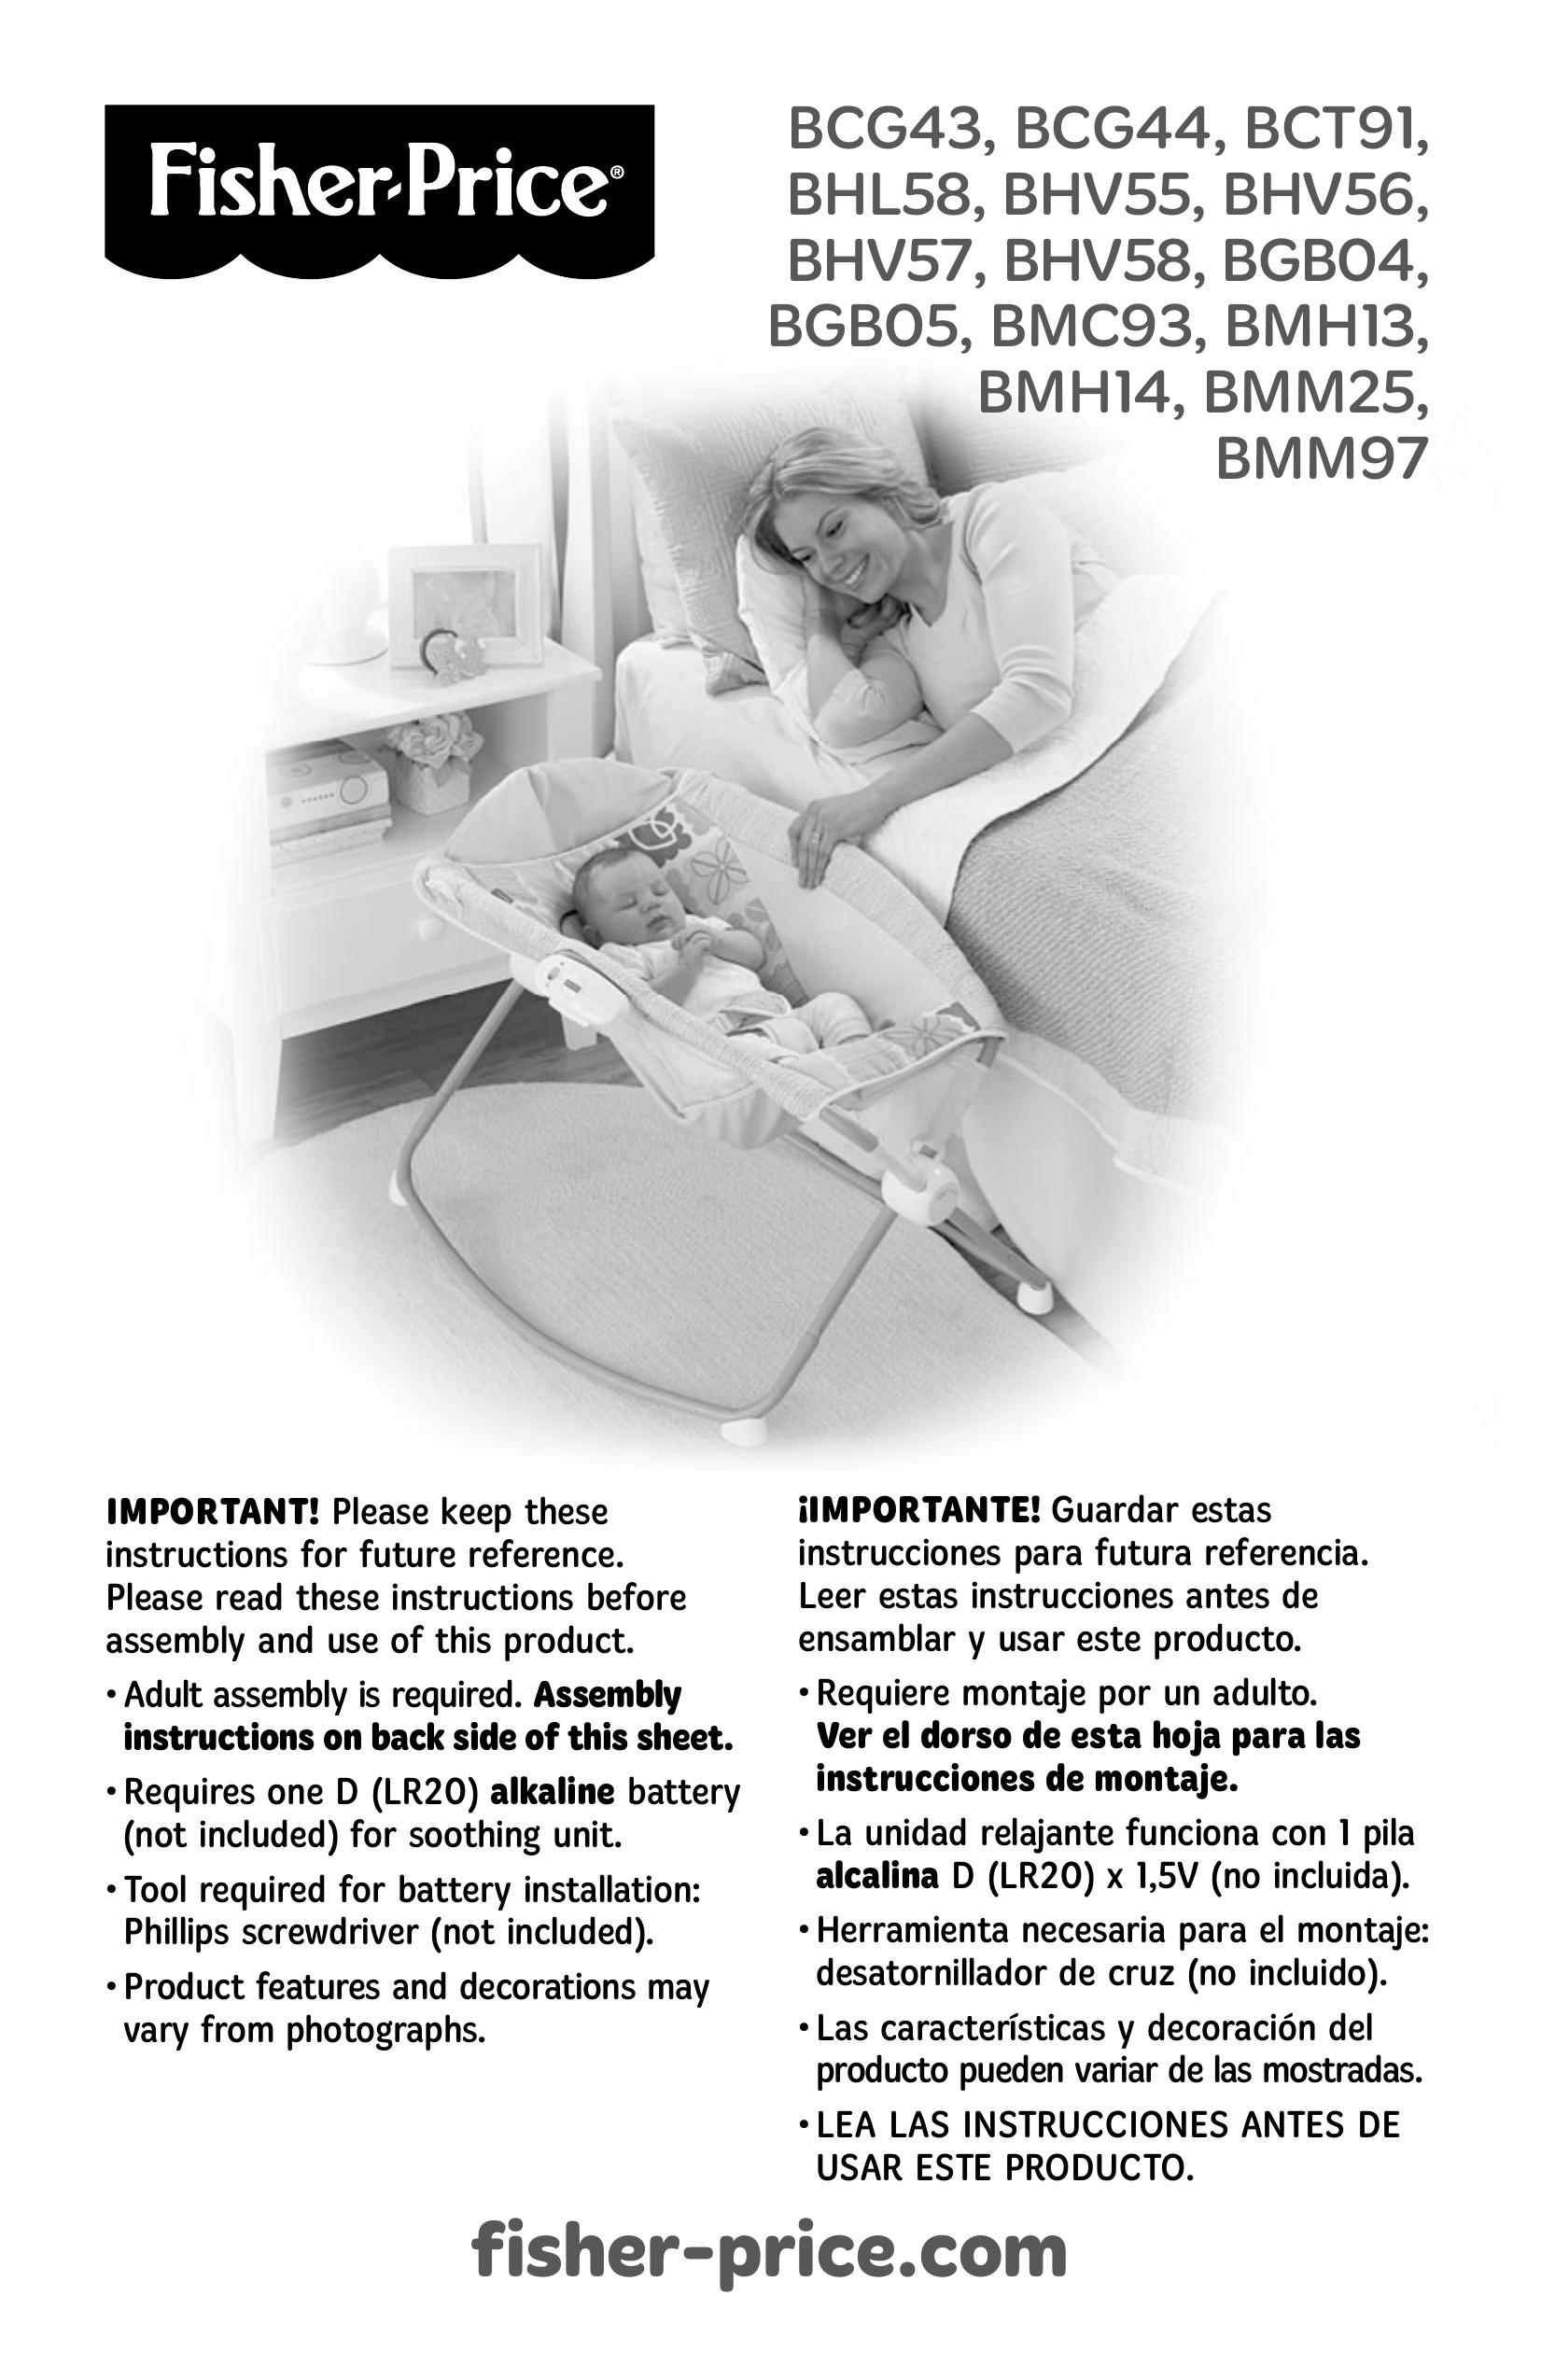 Fisher-Price BCG43 Sleep Apnea Machine User Manual